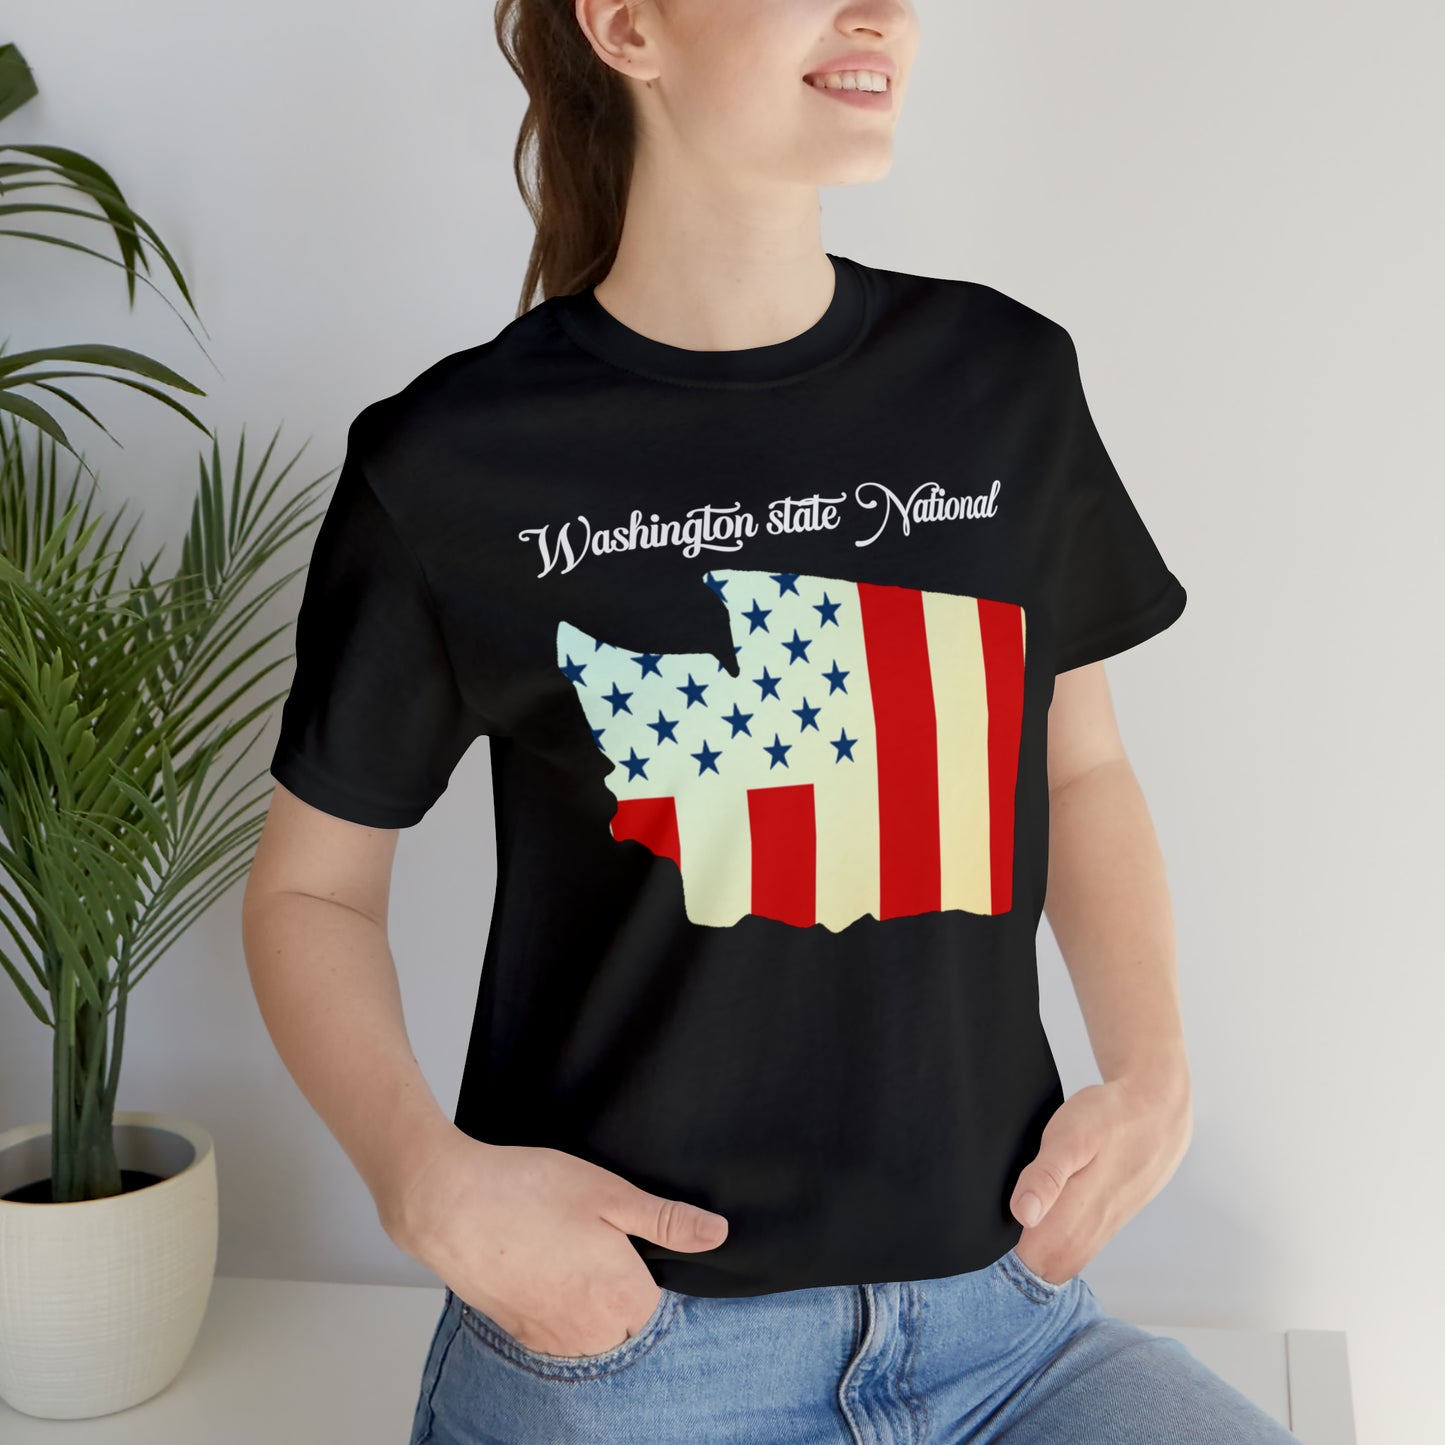 American state National - " Washington "